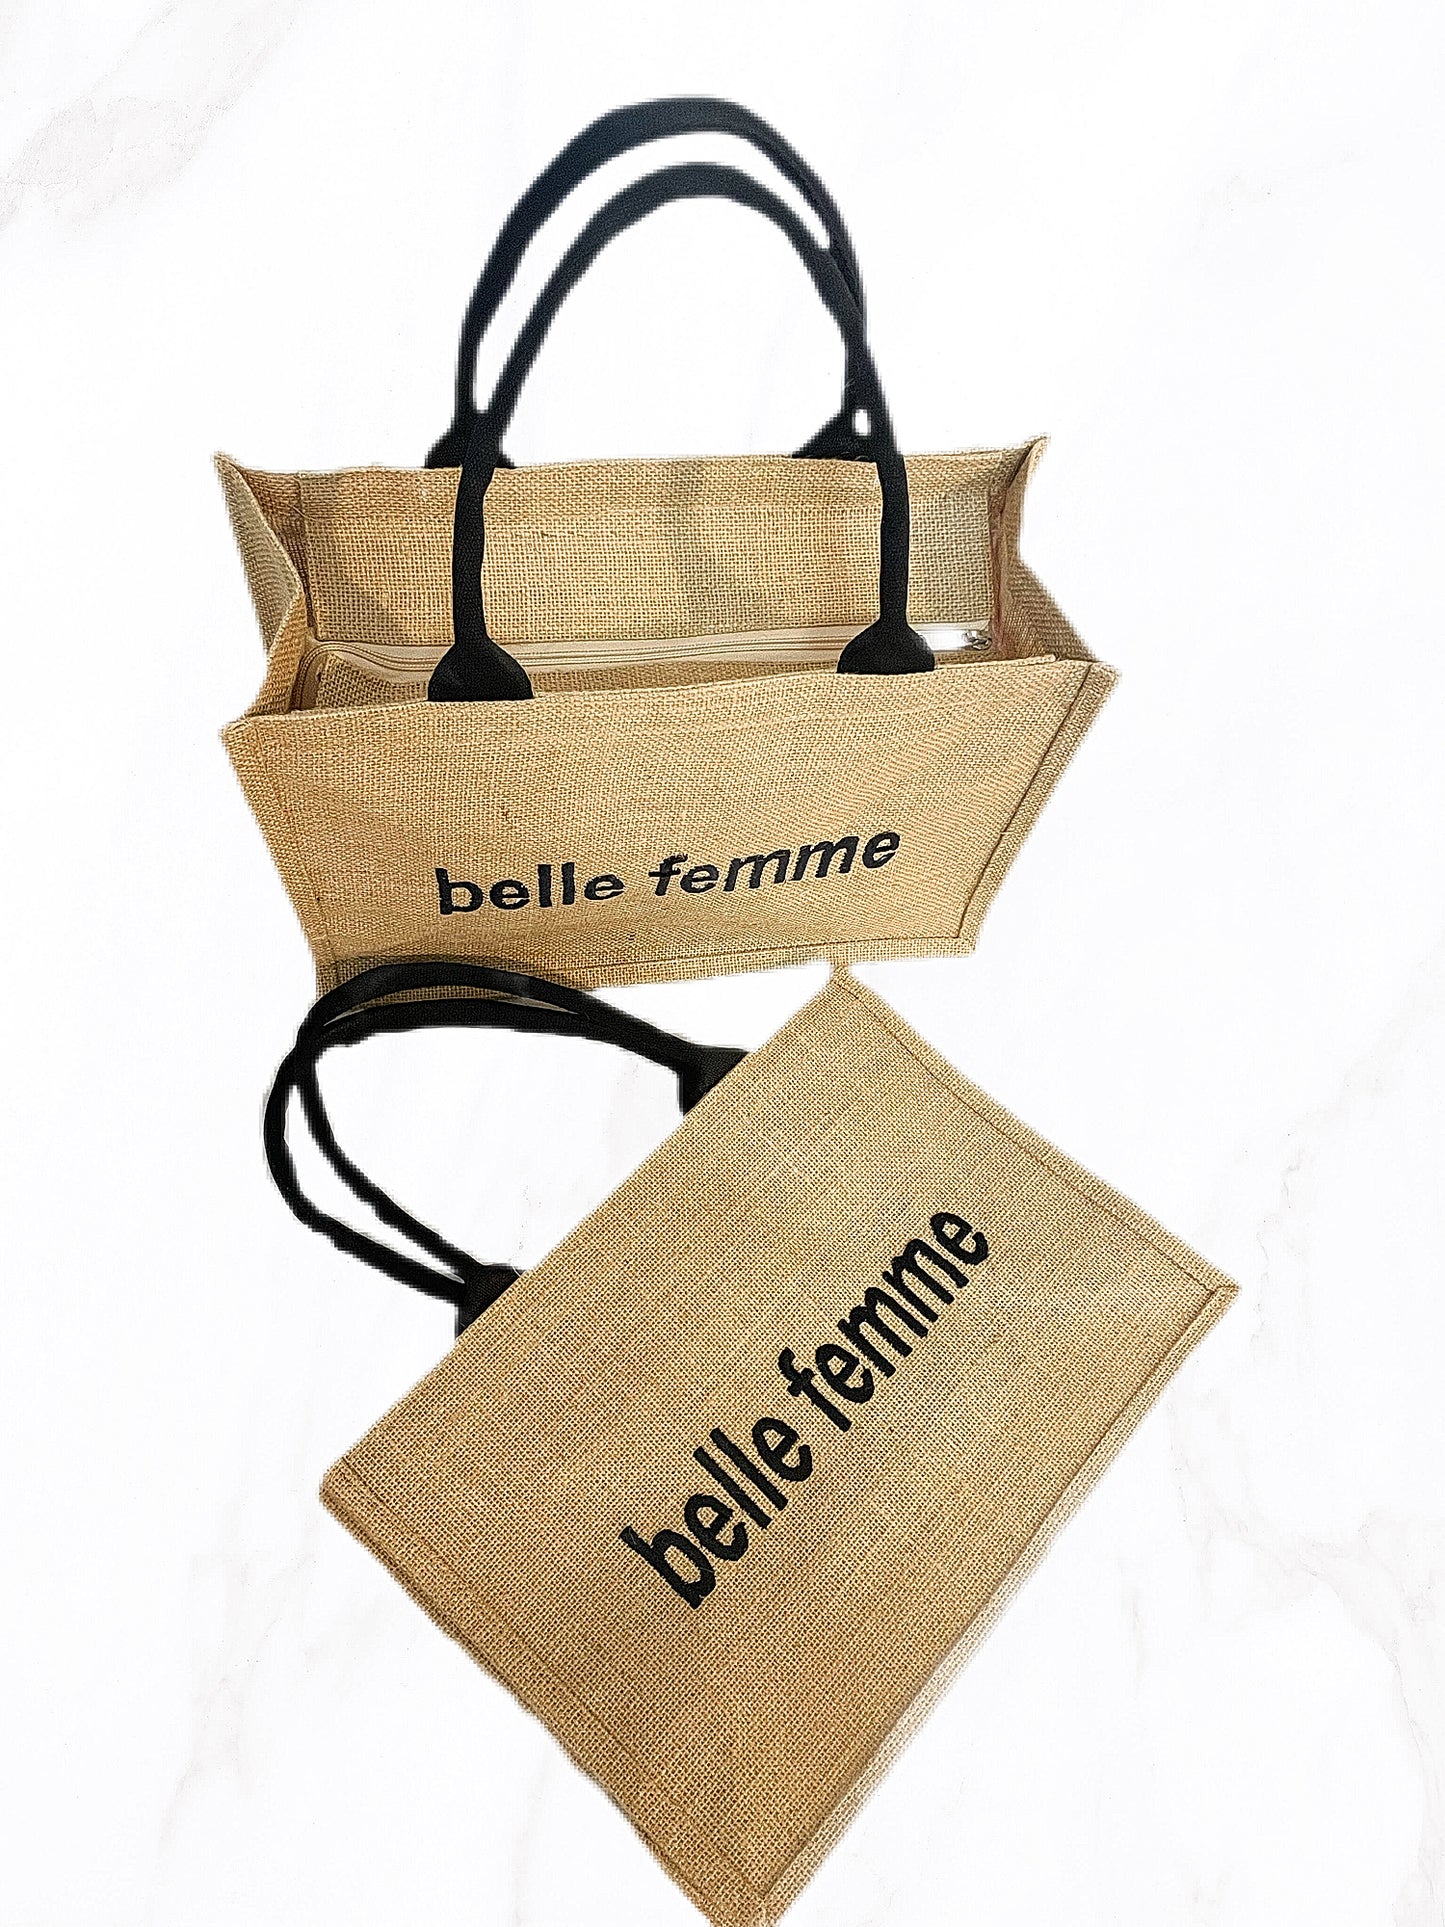 Belle Femme Jute Tote Bag (M)